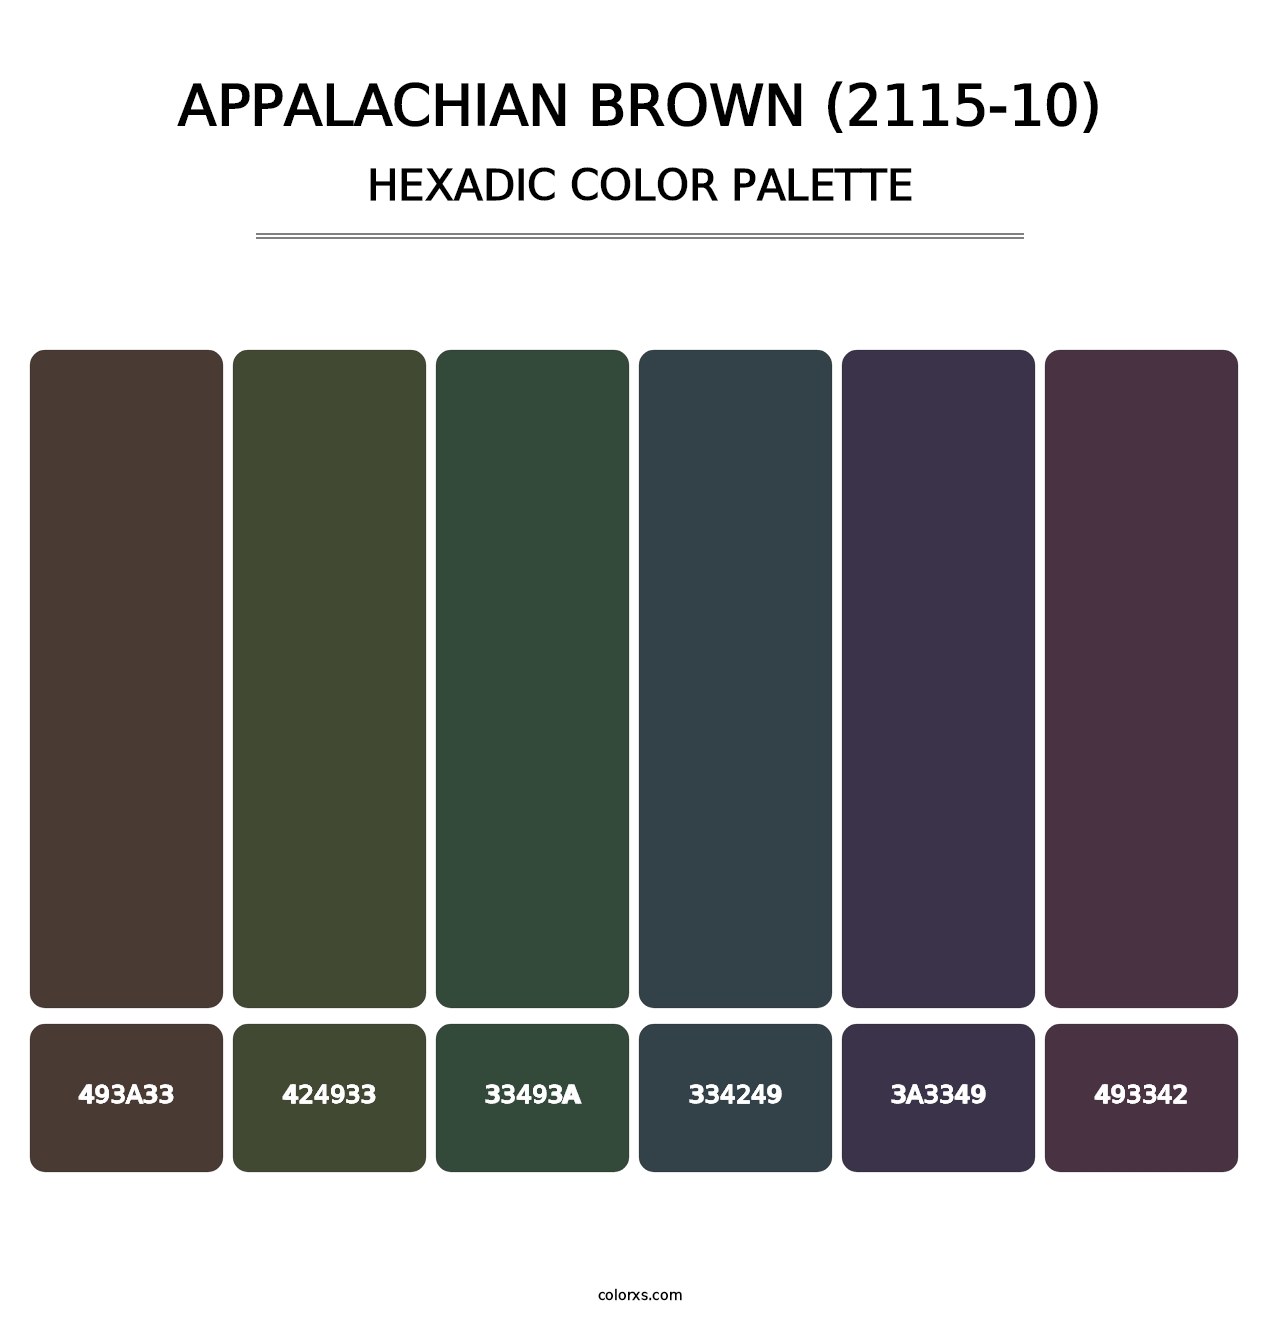 Appalachian Brown (2115-10) - Hexadic Color Palette